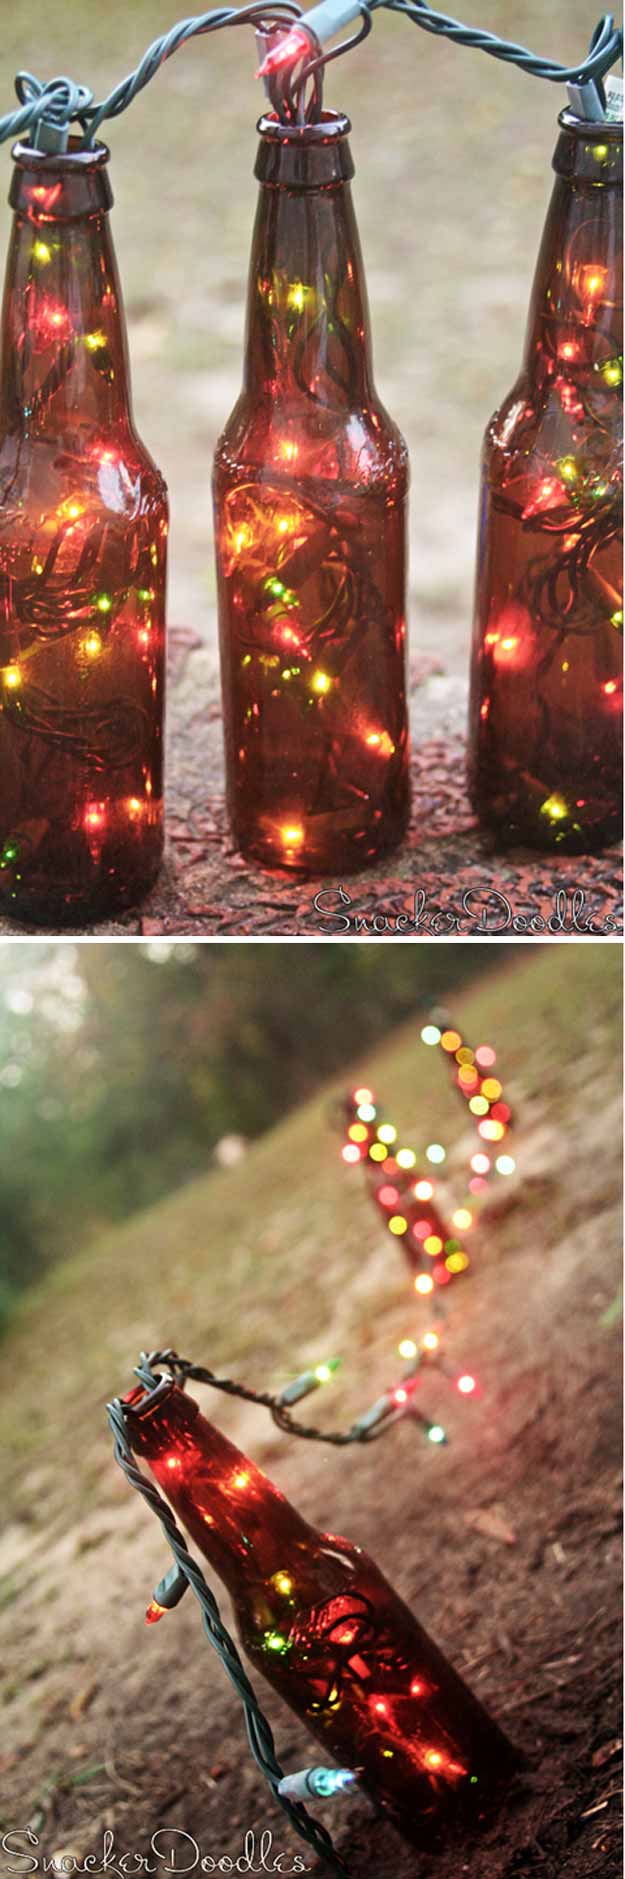 24 creative uses for beer bottles beer bottle lights.jpg